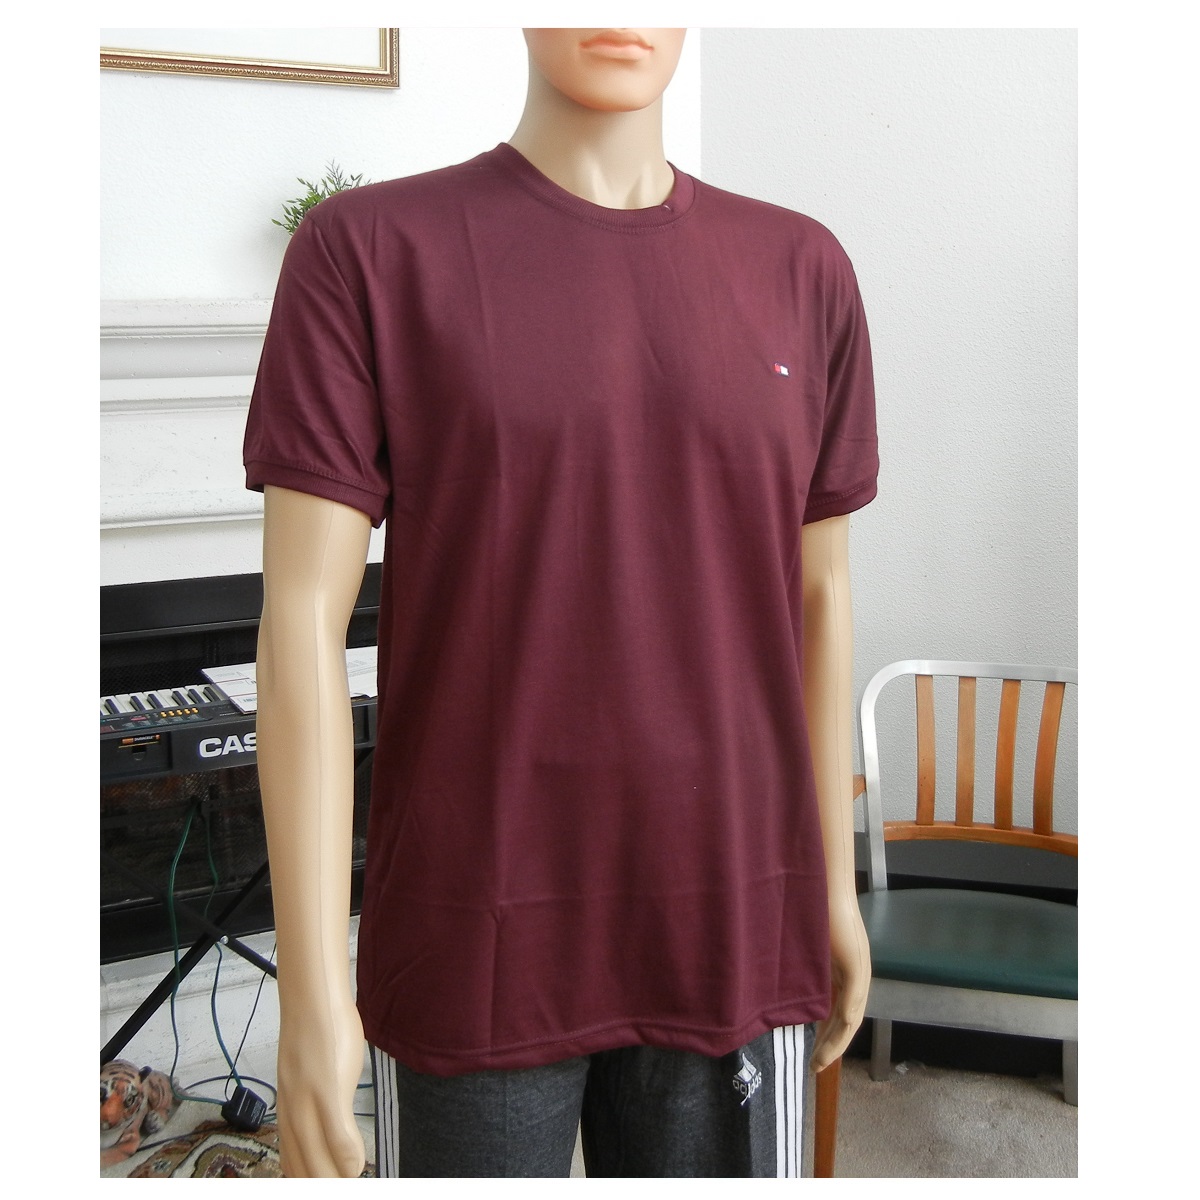 Men's T-Shirt, Short Sleeve Cotton T-Shirt Basic Plain T-Shirt for men